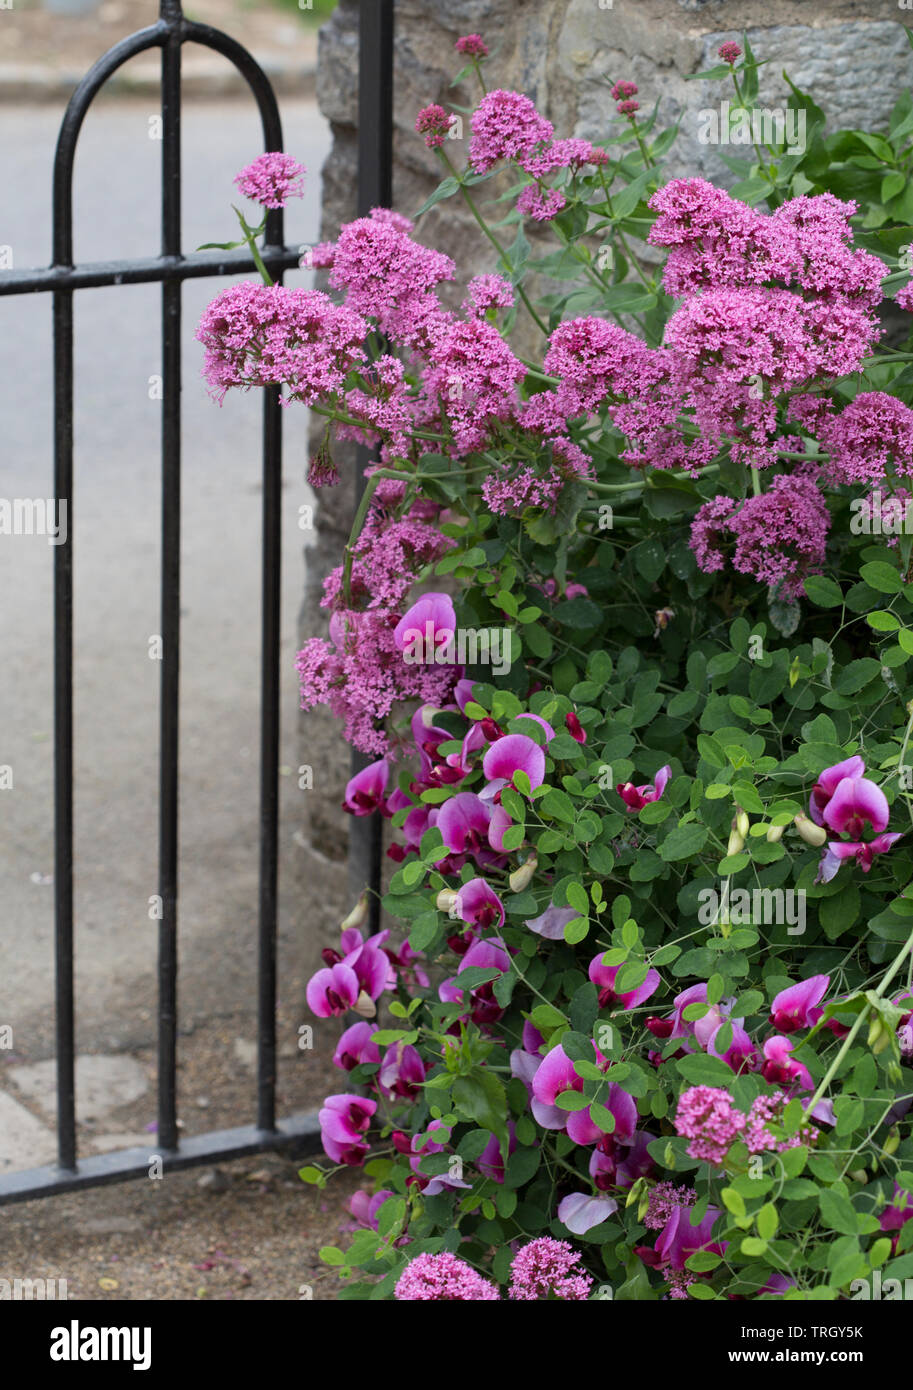 Flowers blooming around garden gate in Ireland castle grounds Stock Photo